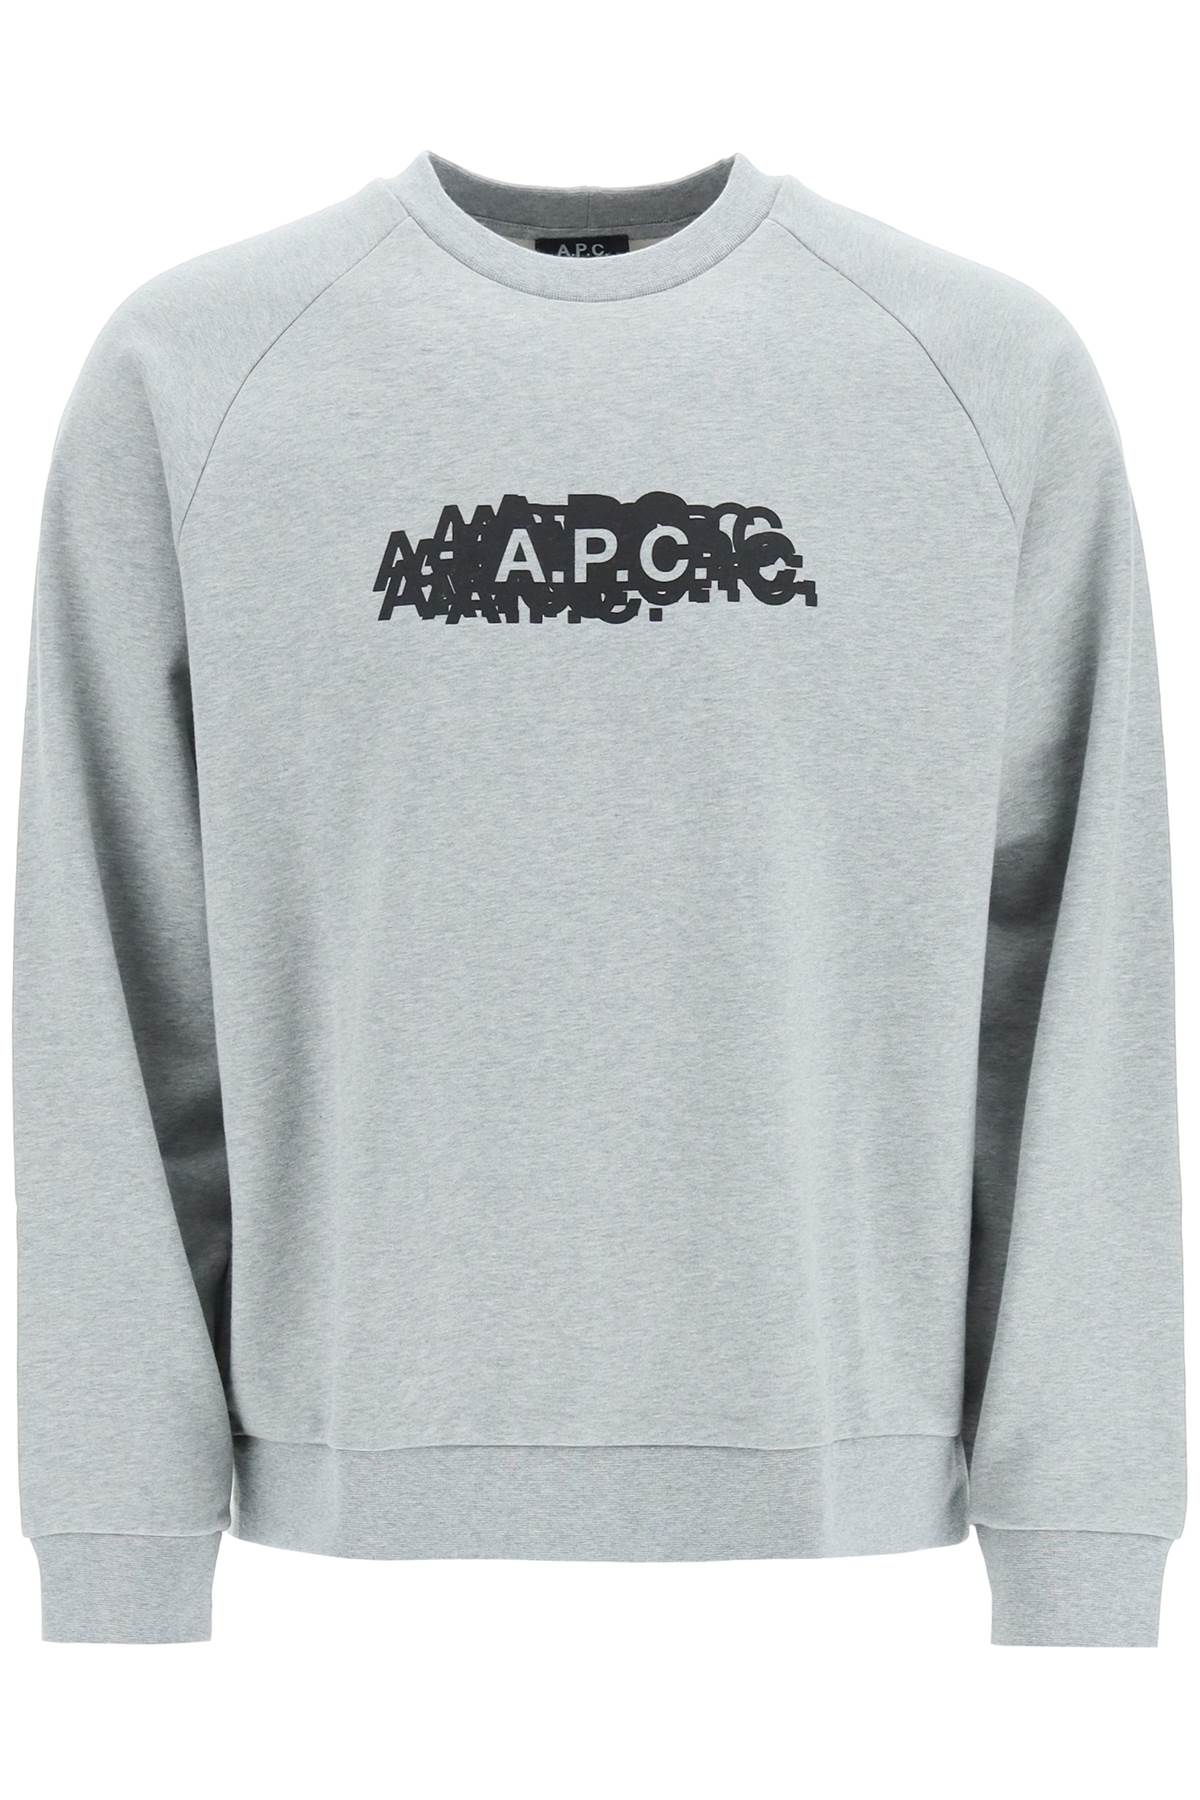 A.P.C. koroku Crew-neck Sweatshirt